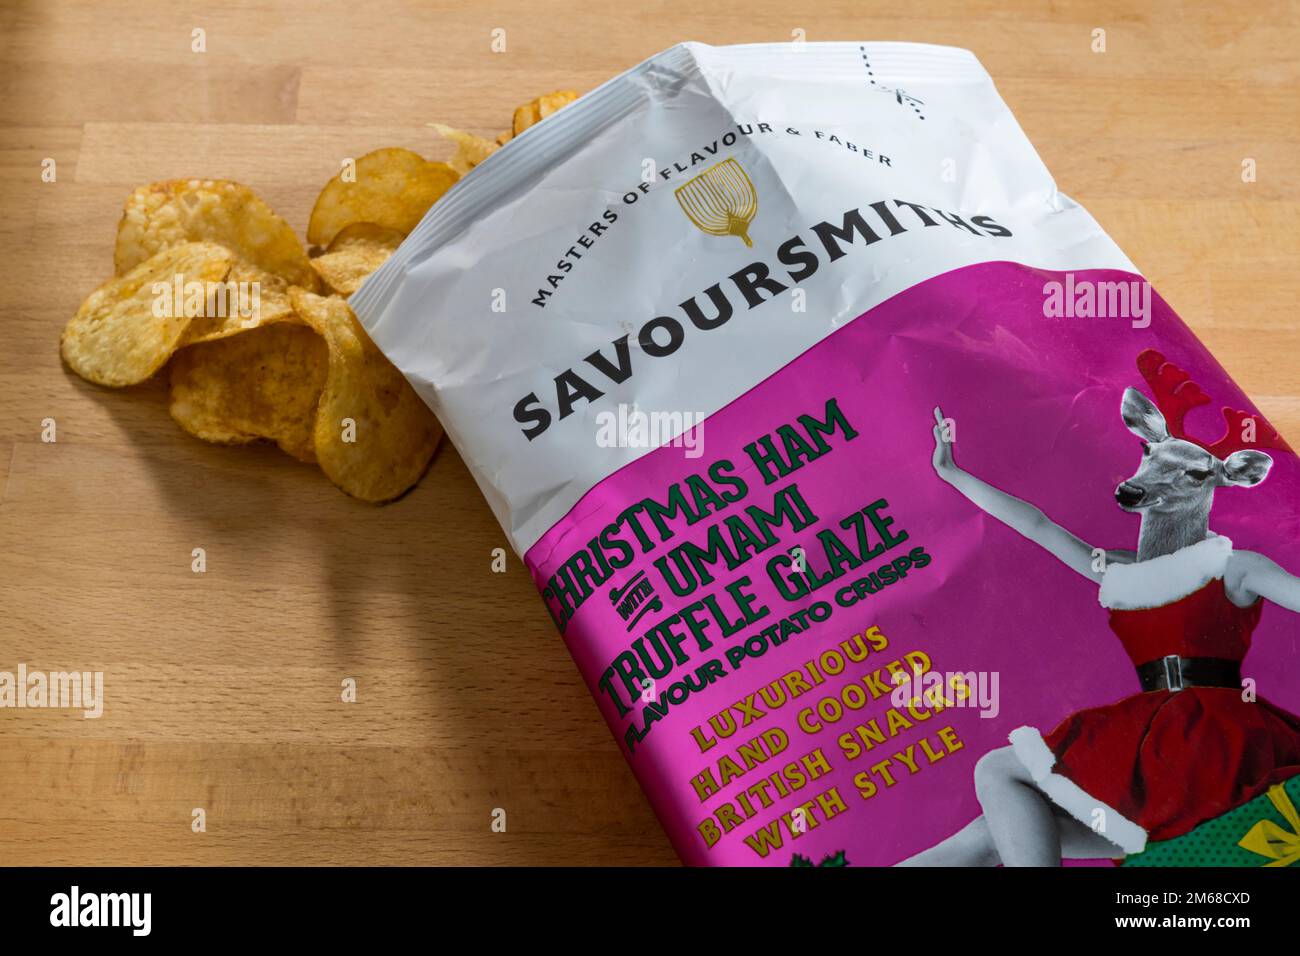 A bag of Savoursmiths Christmas Ham with Umami Truffle Glaze flavour potato crisps. Stock Photo